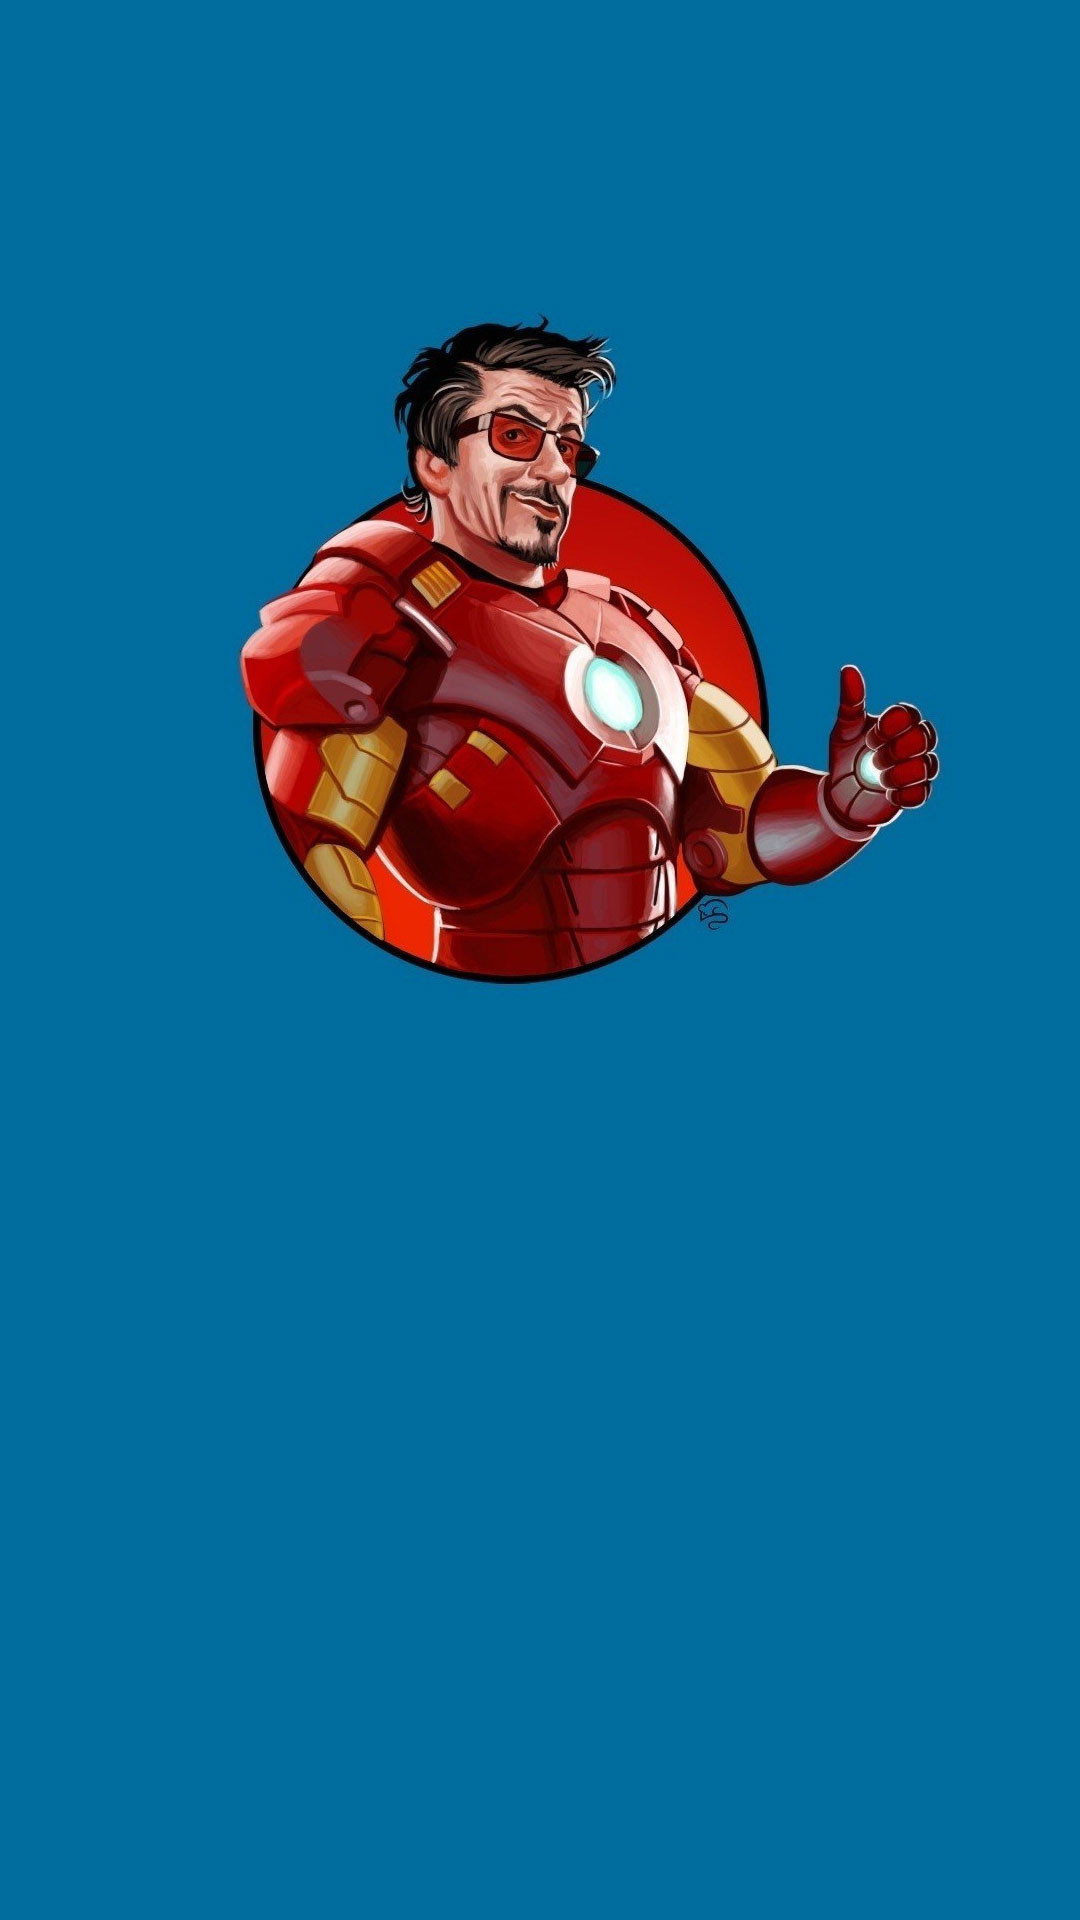 1080x1920 Iron-Man iPhone 6 Plus wallpaper